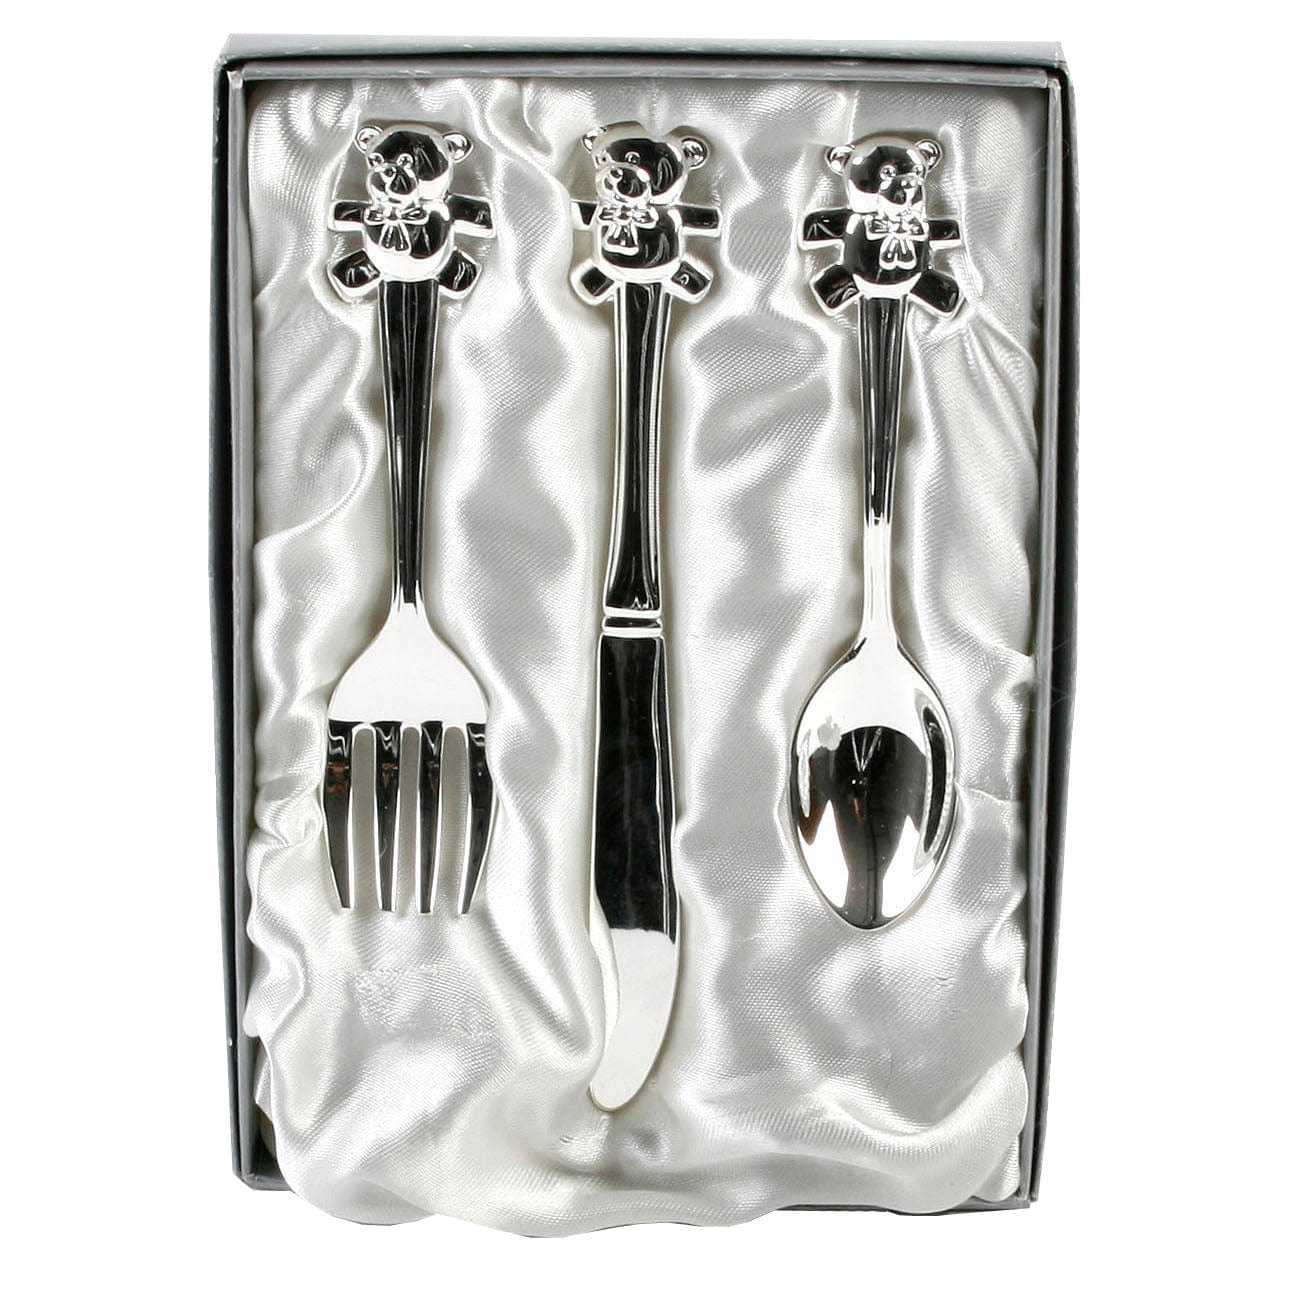 Widdop Gifts Storage Tins Silver Plated Children's Teddy Bear Cutlery Set